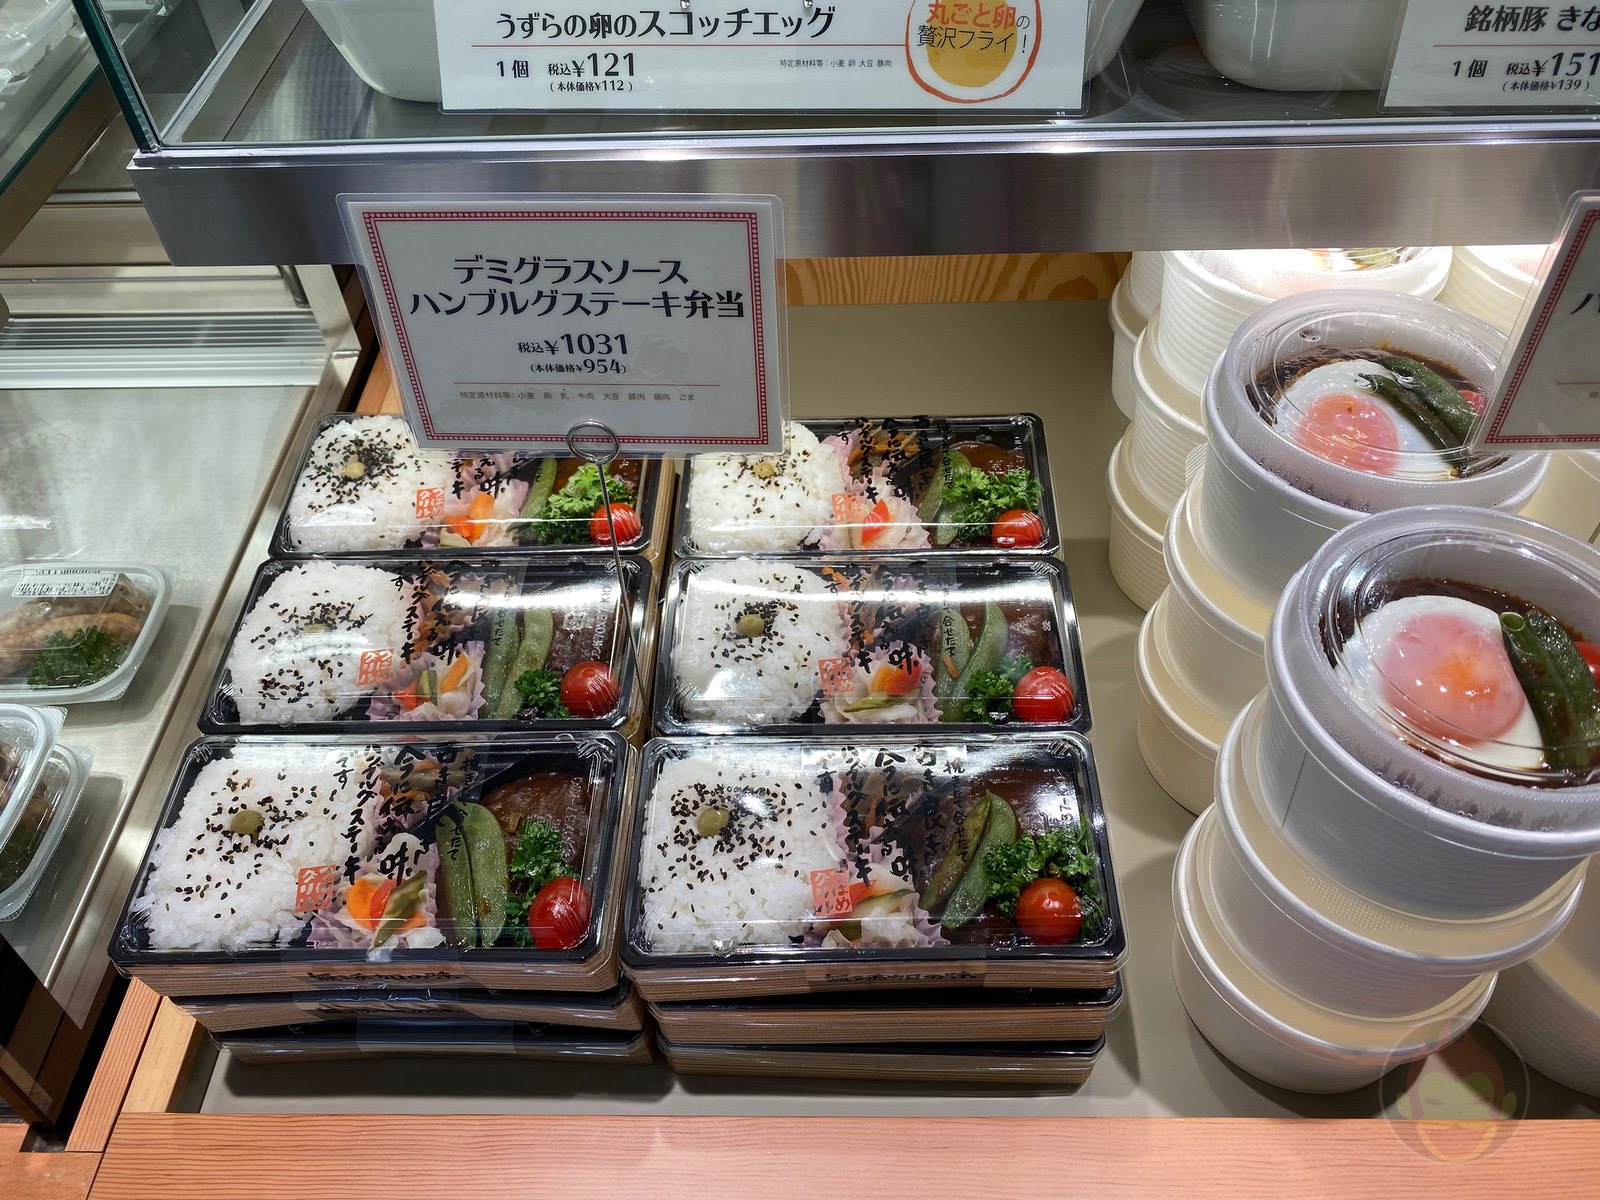 Shibuya-Scramble-Square-Food-I-Ate-146.jpeg